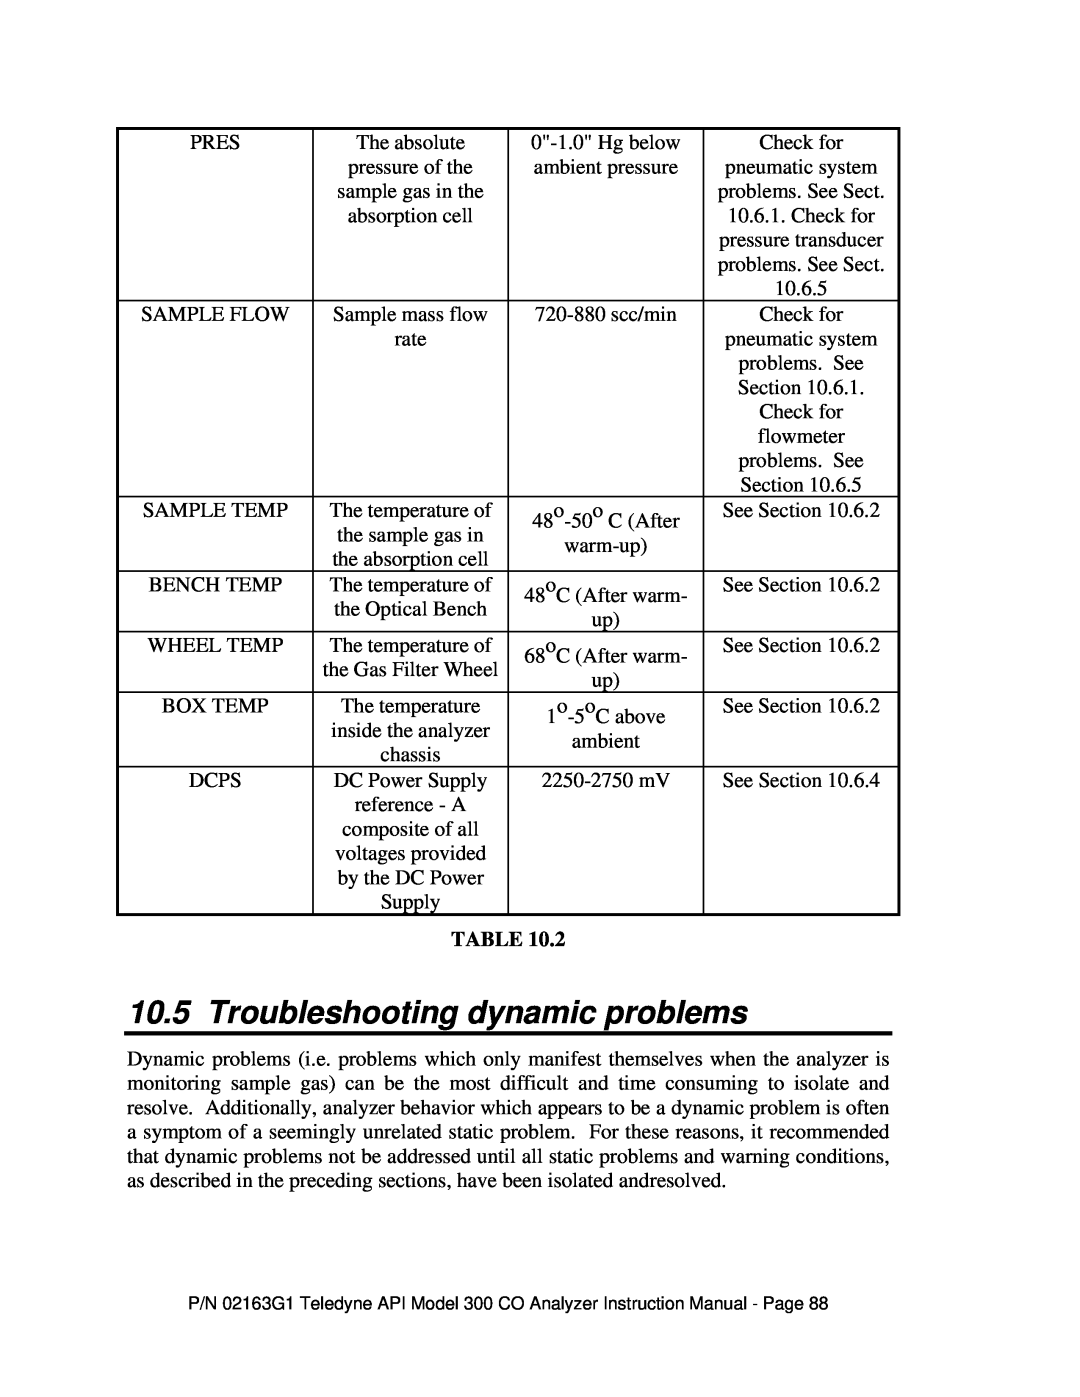 Teledyne 300 instruction manual Troubleshooting dynamic problems 